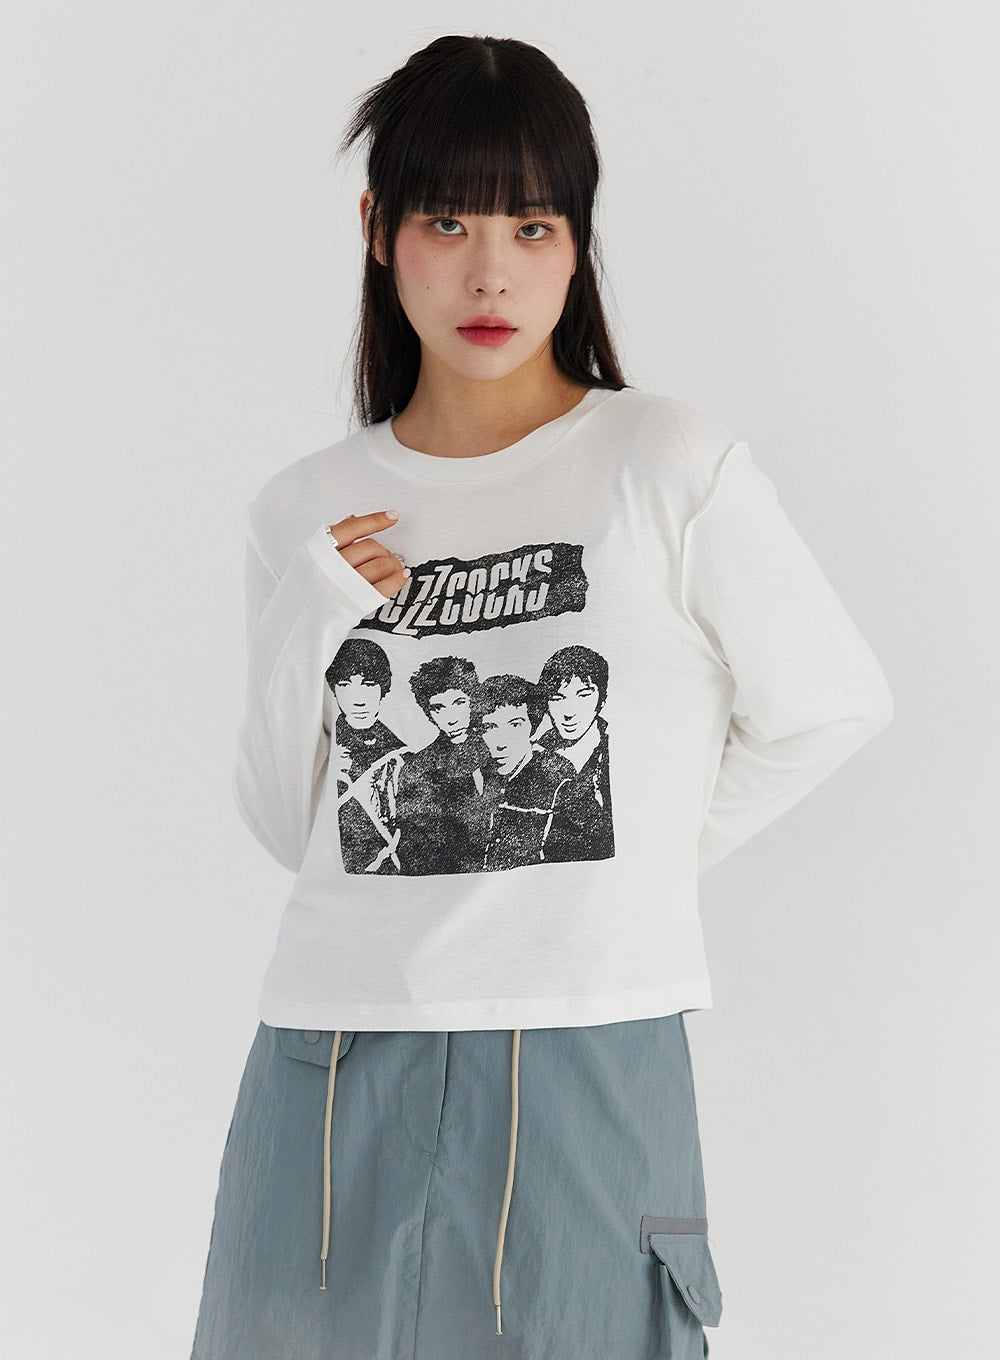 BTS T-shirt and skirt